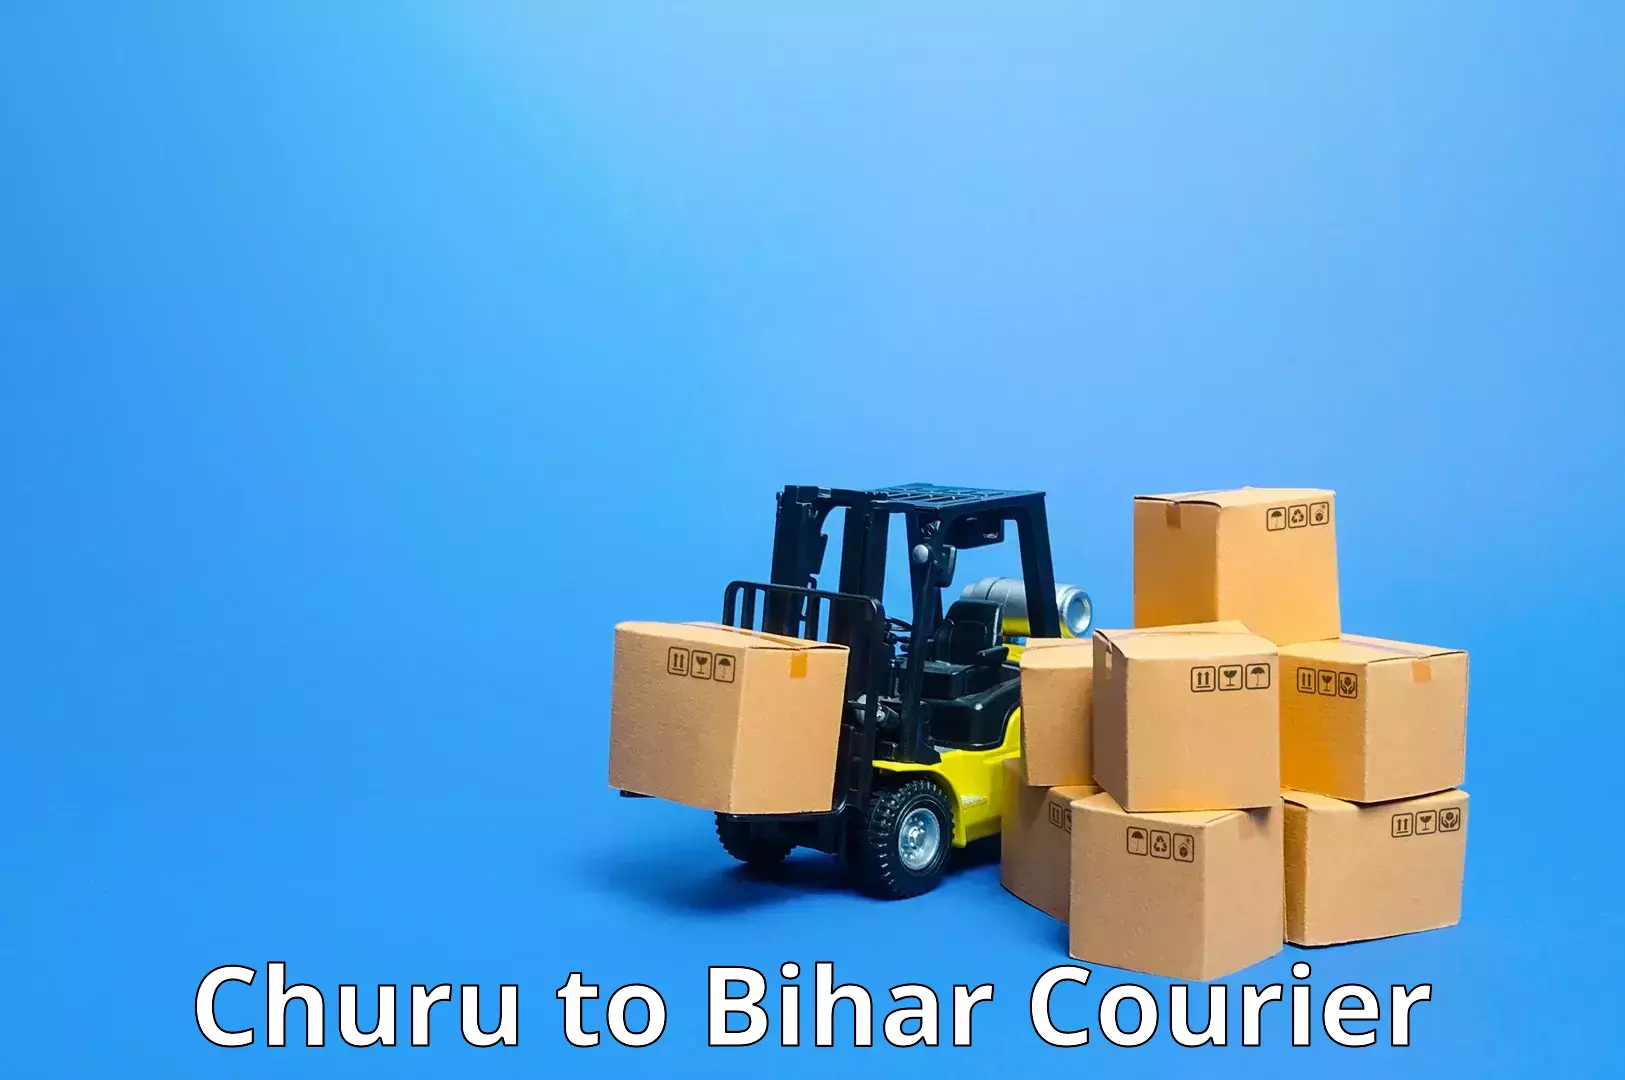 Courier service comparison Churu to Bihar